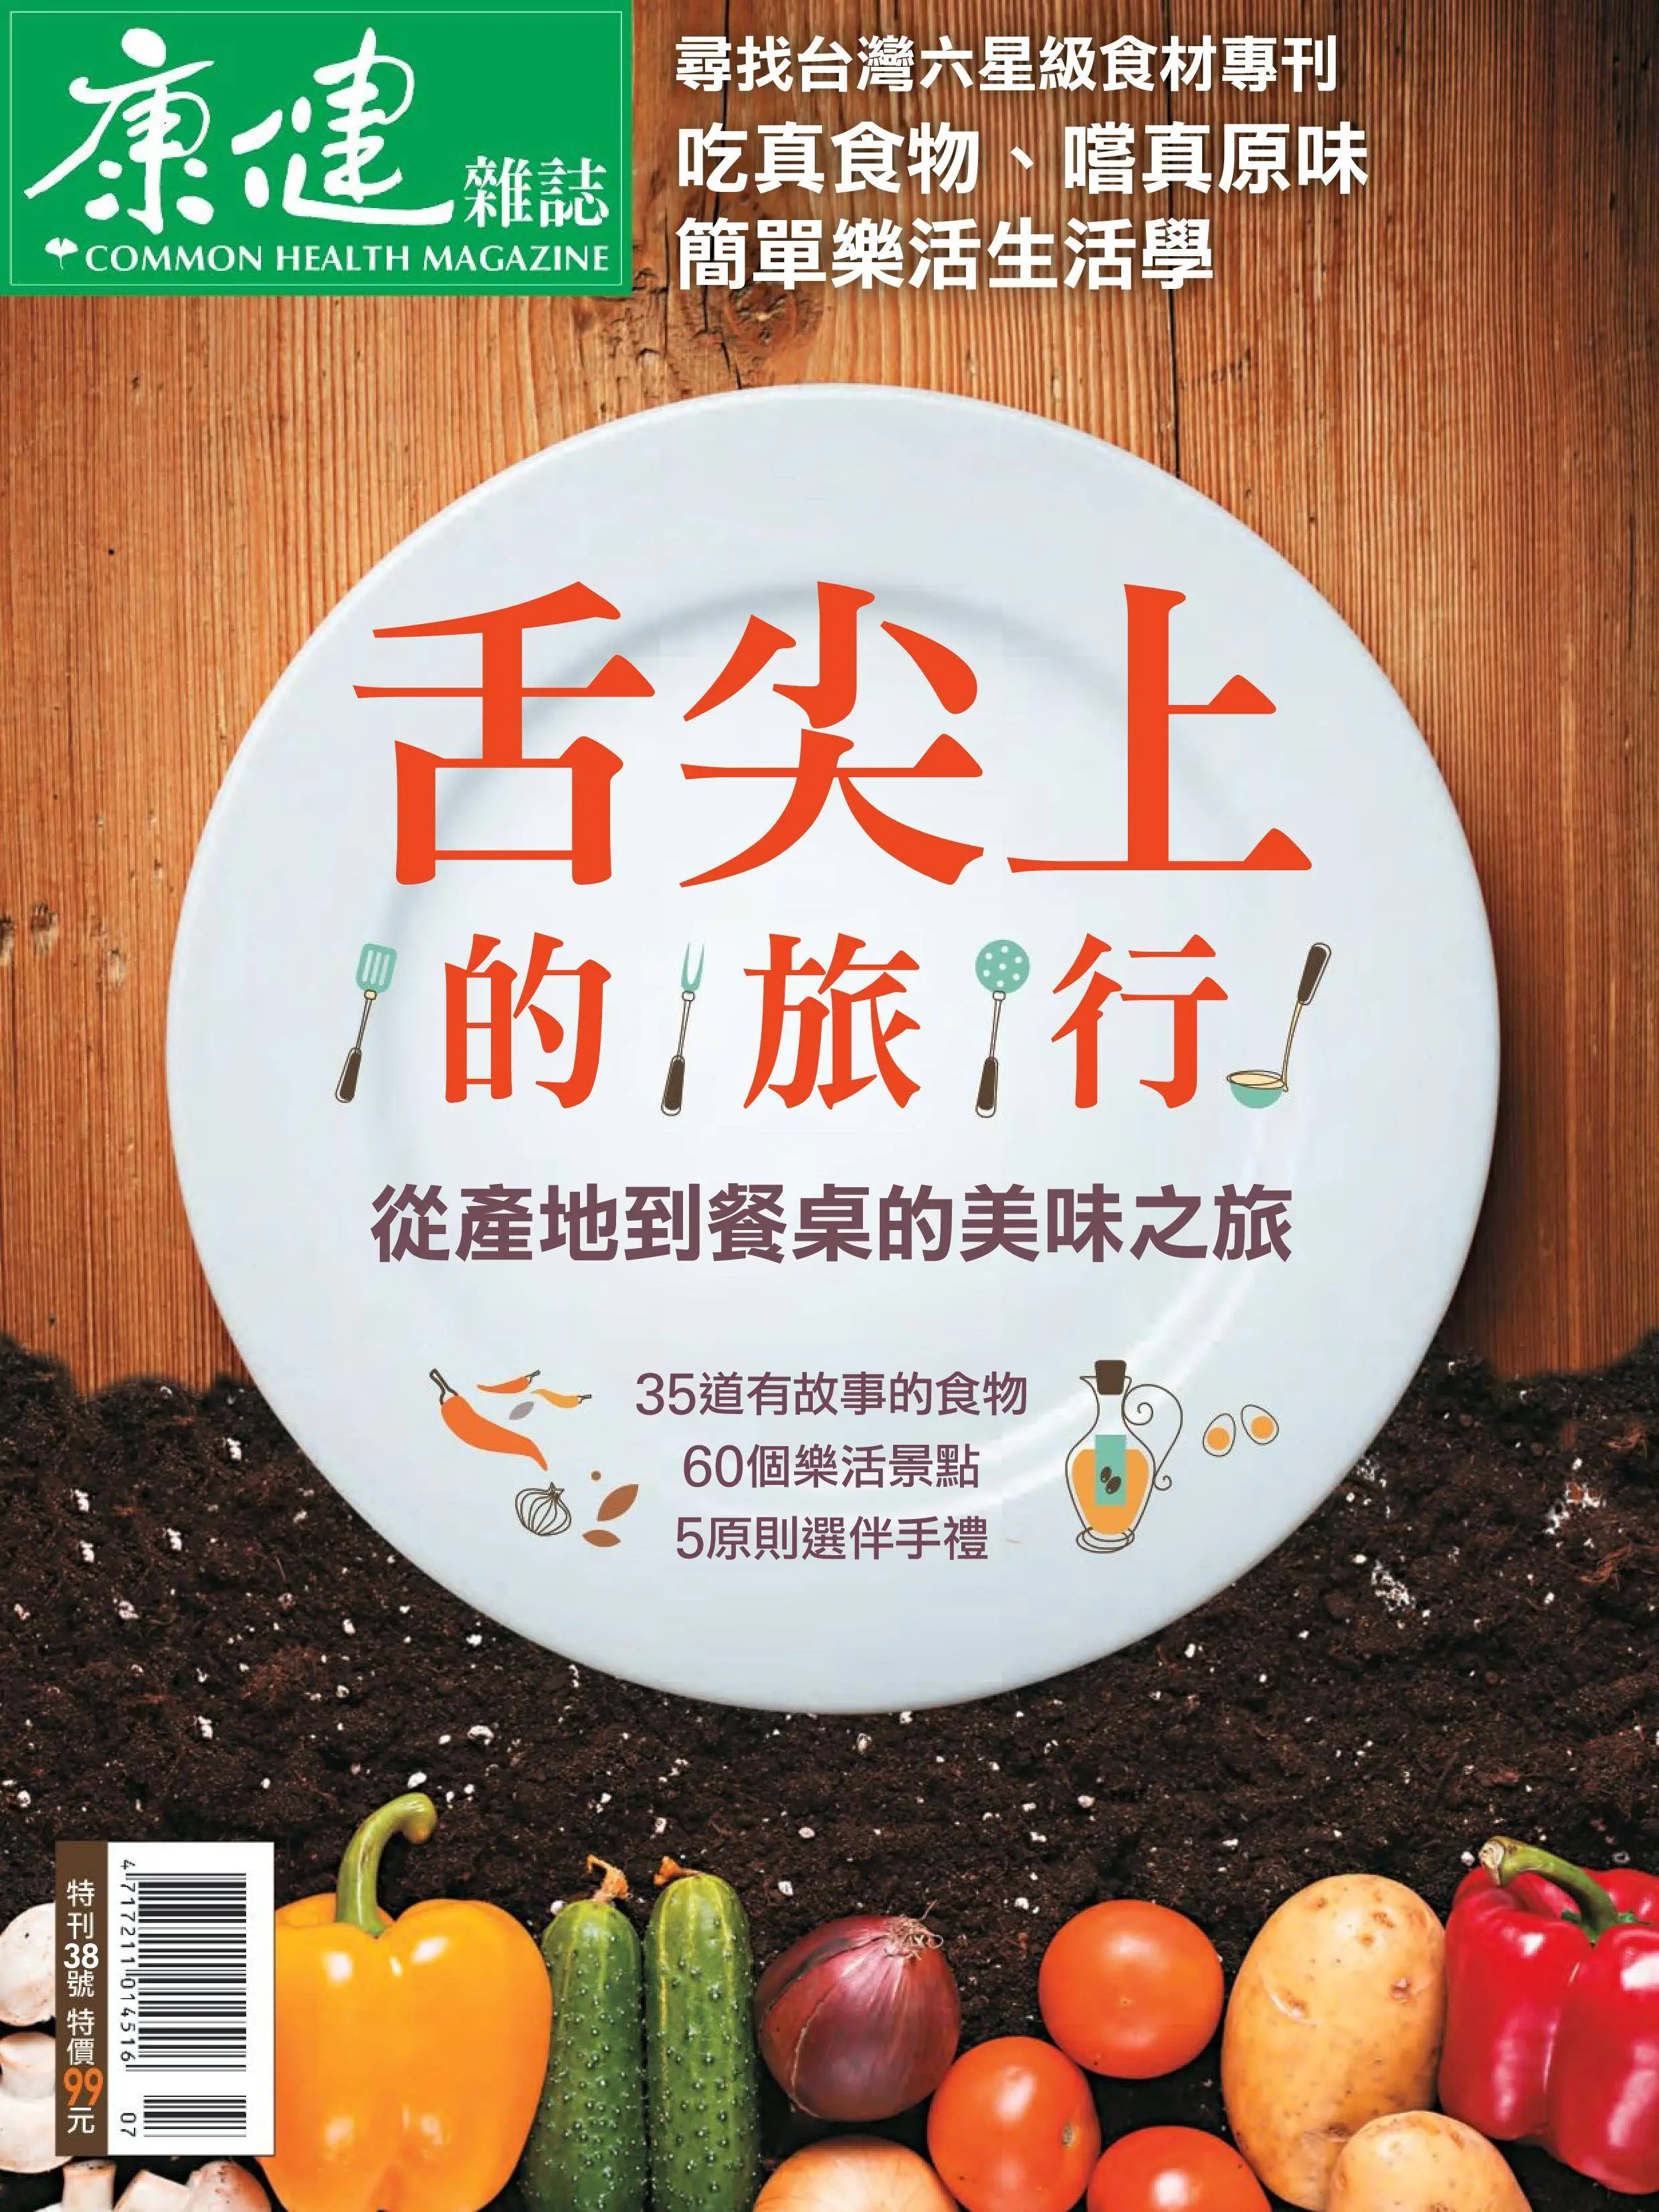 Common Health Special Issue 康健主題專刊 - 三月 01, 2014